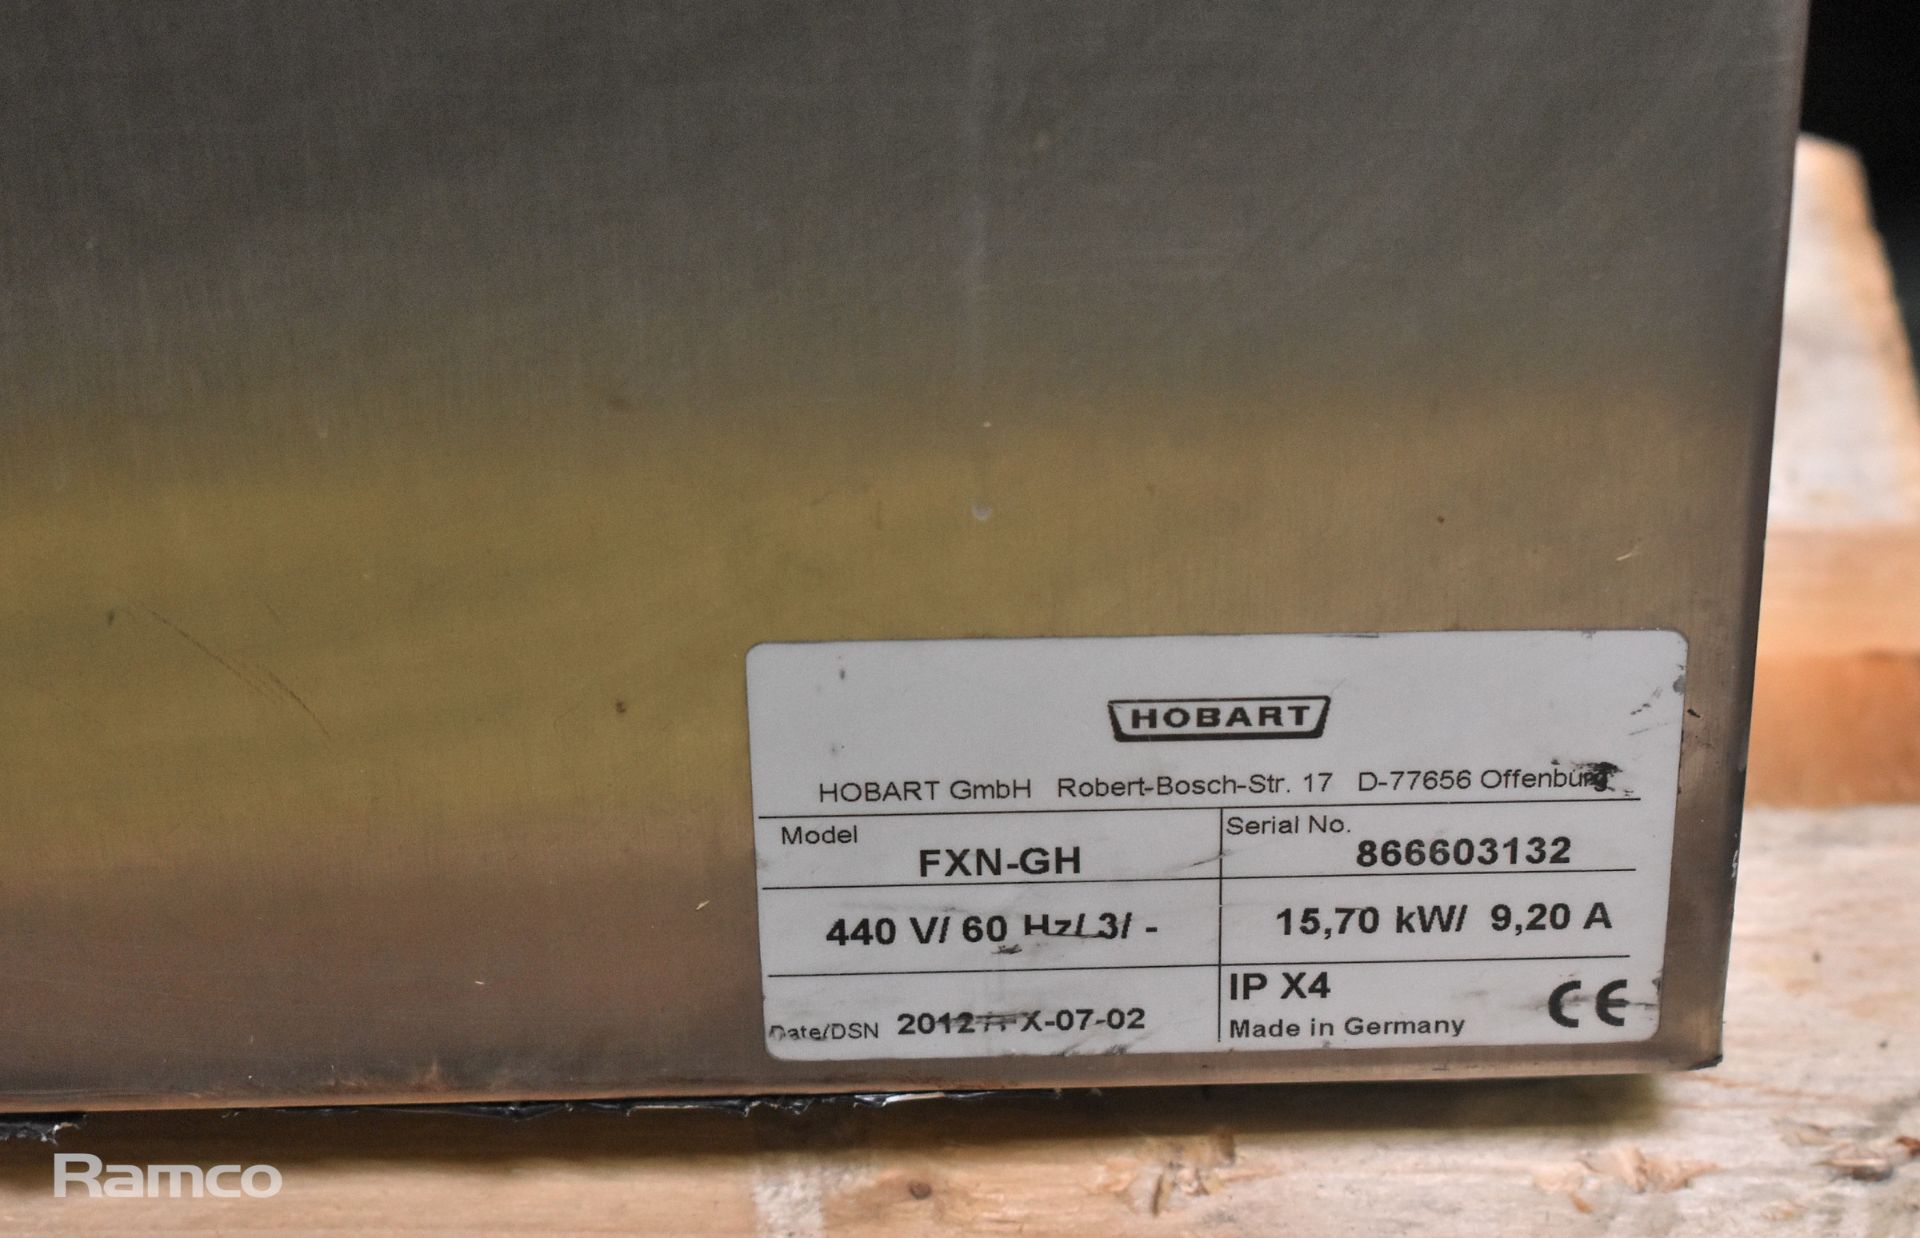 Hobart FXN-GH stainless steel dishwasher - 440V 60Hz - W 600 x D 600 x H 820mm - DENTED SIDE PANEL - Image 4 of 5